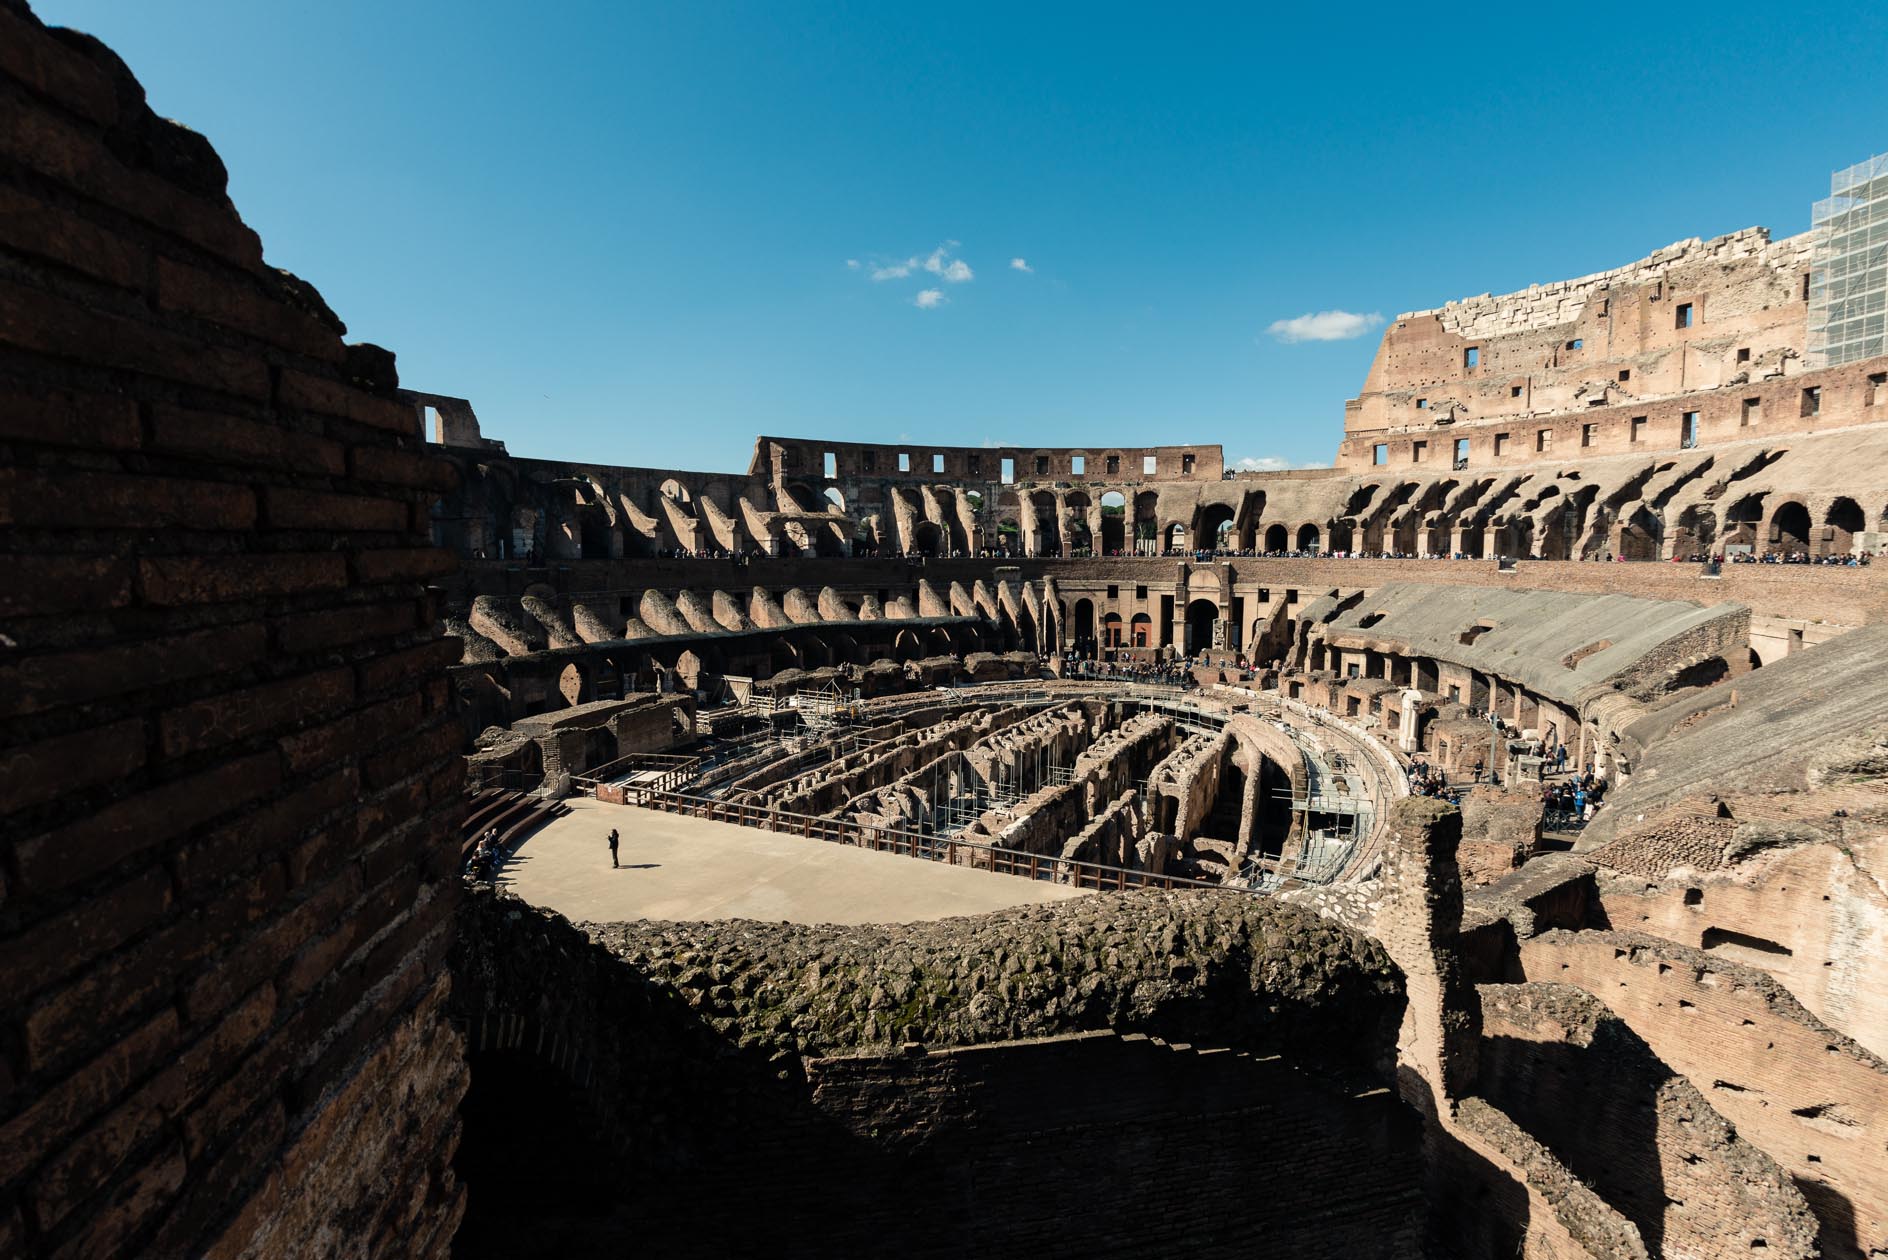 View of Colosseum interior